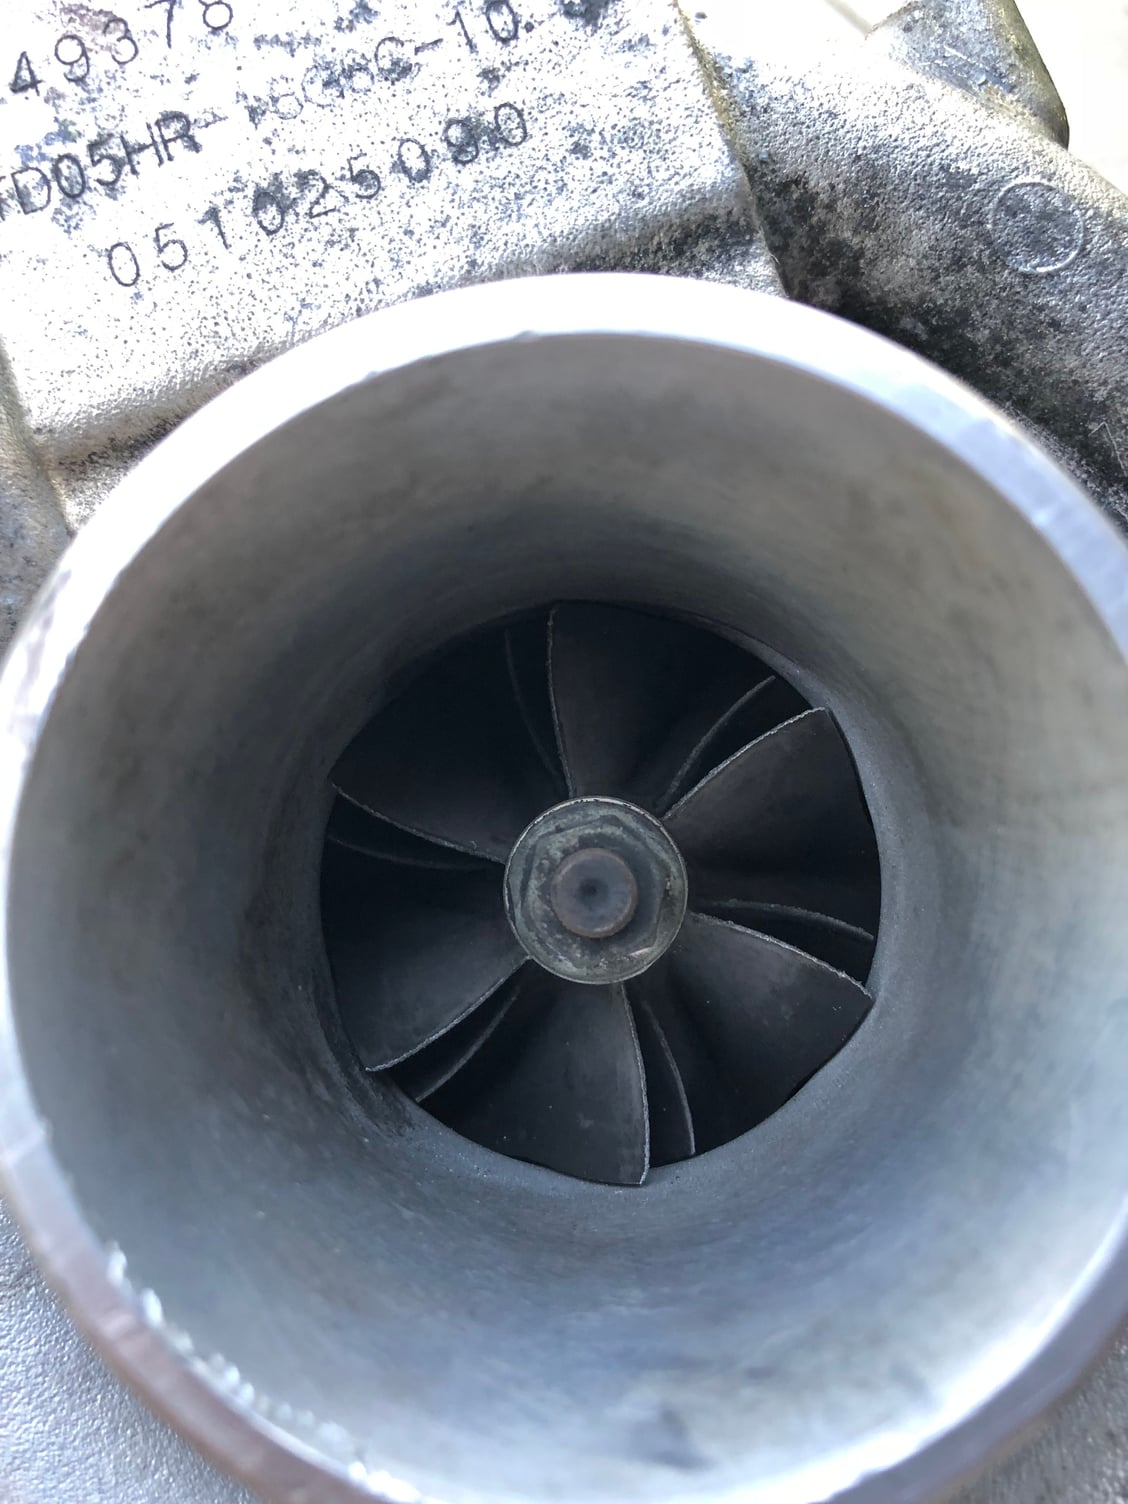 Engine - Power Adders - FP 71HTA - evo 9 turbo - evo 9 bov - intake - LICP - MAF - Used - Green Bay, WI 54313, United States